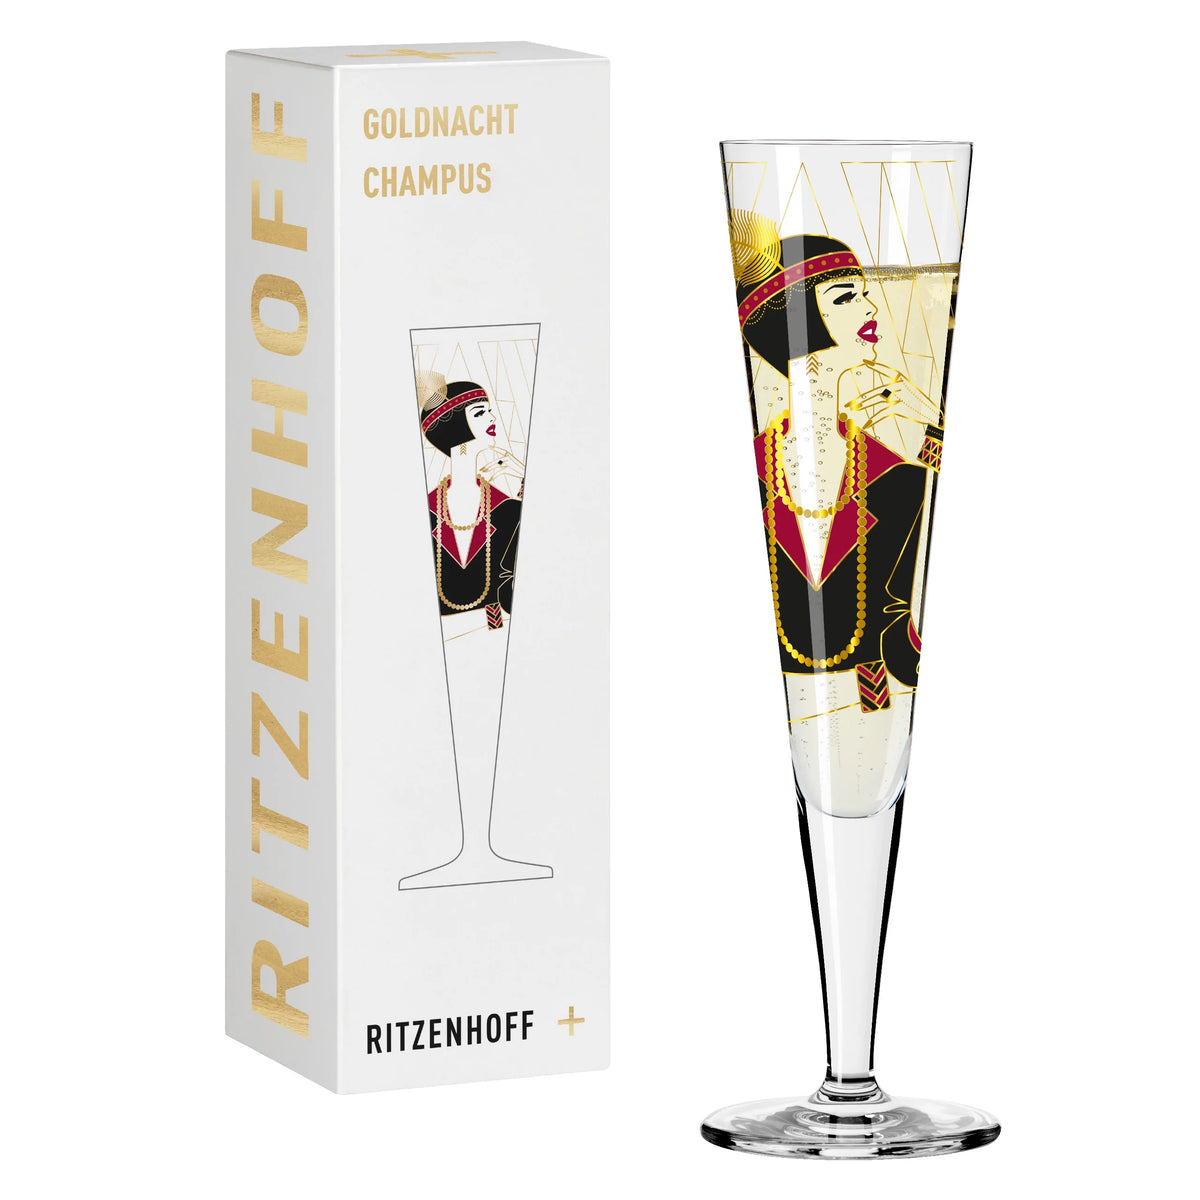 The Ritzenhoff Goldnacht Champagne Glass, 1071027, design by Samy Halim, presented in an exclusive gift box.